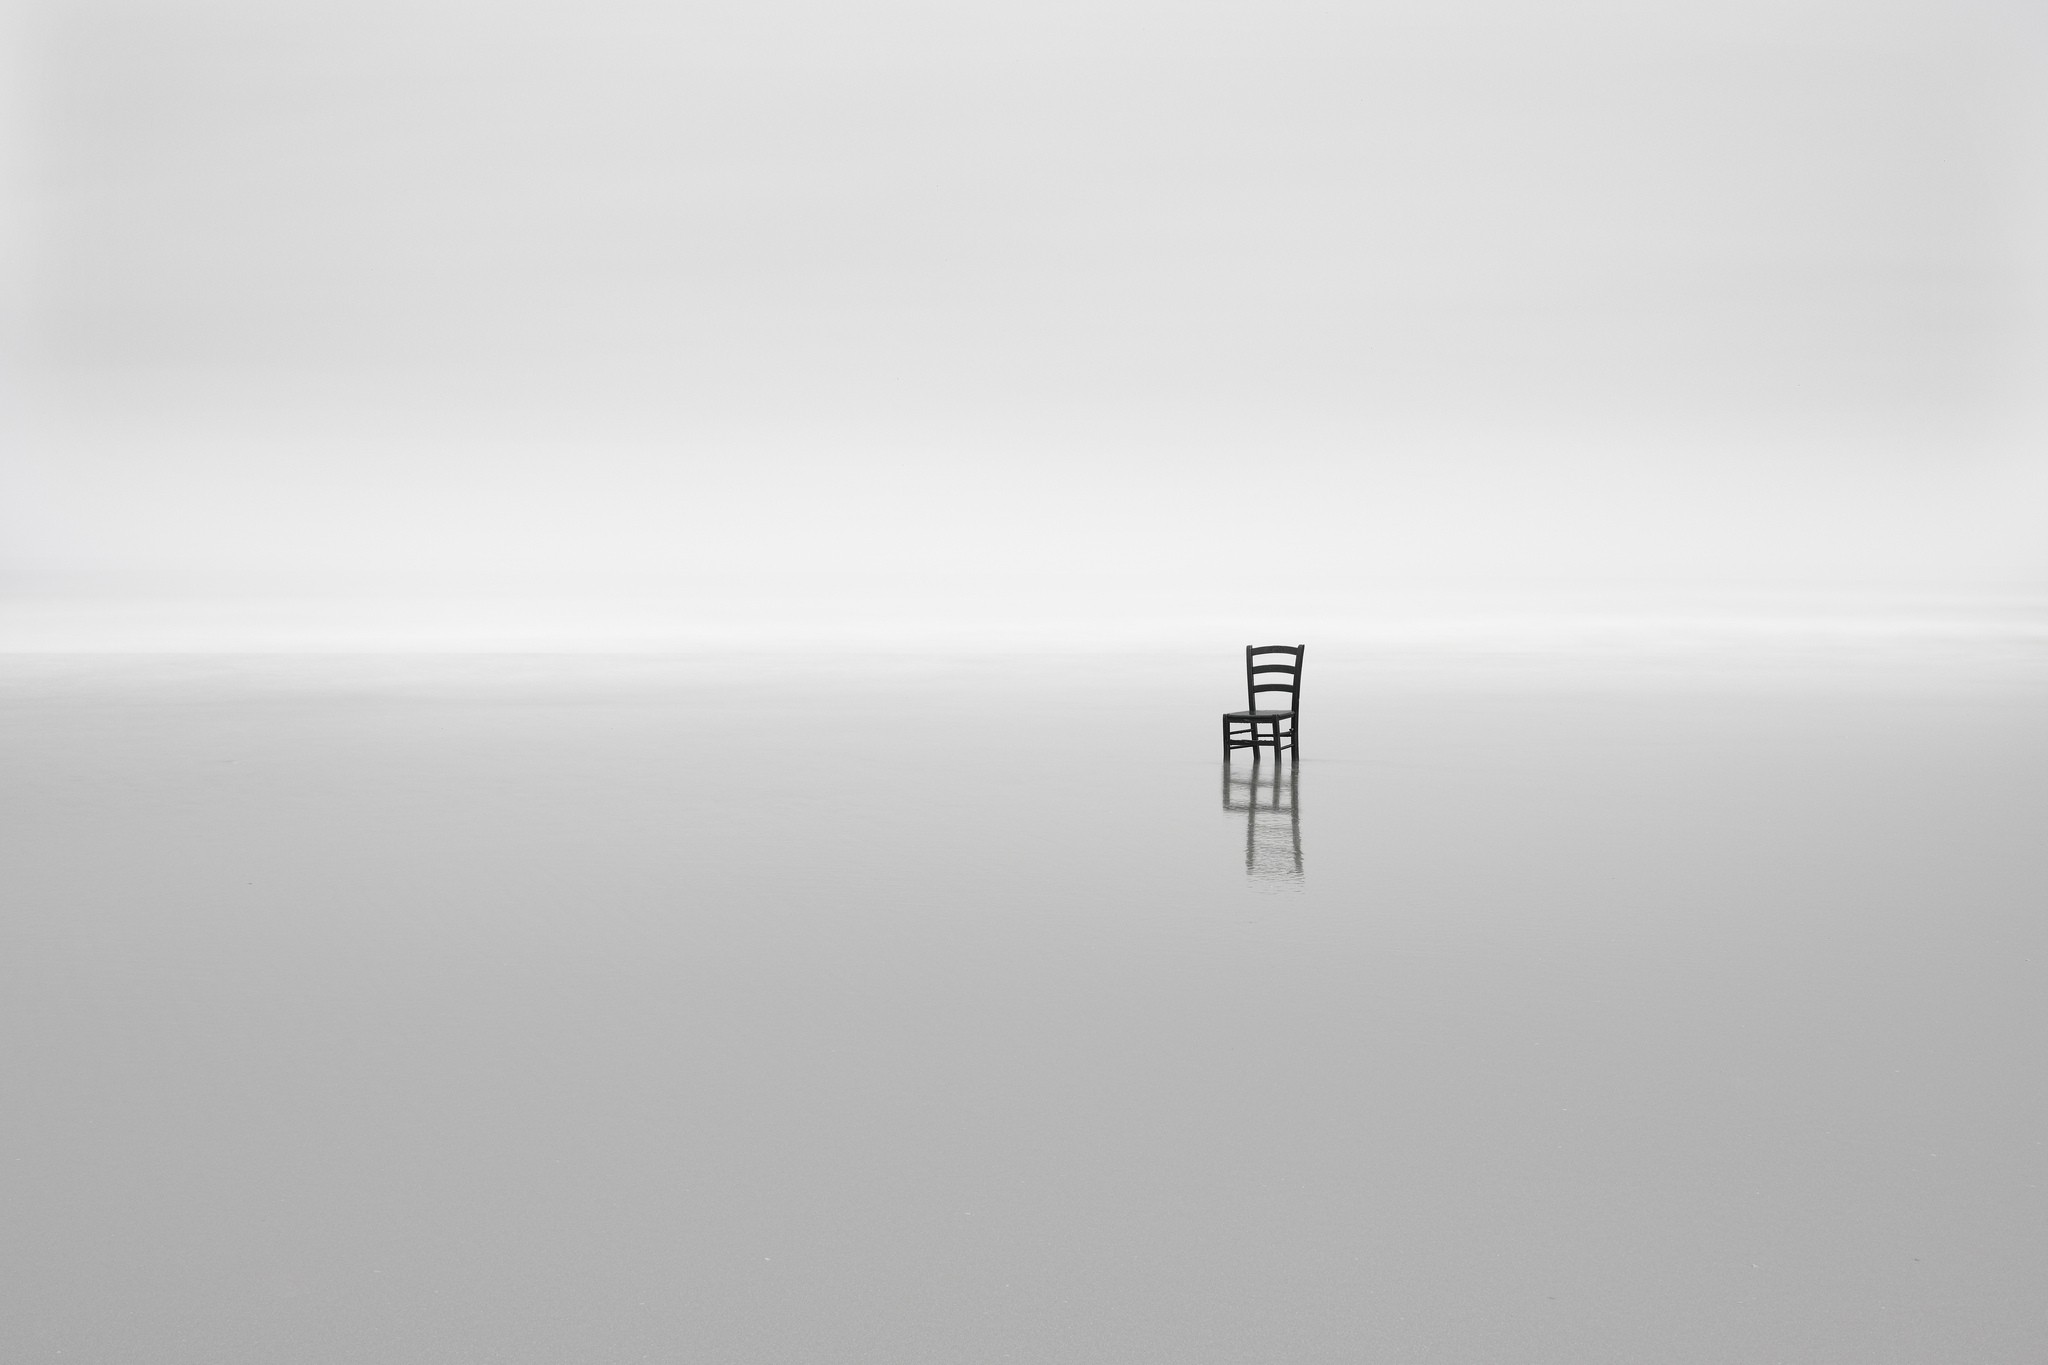 General 2048x1365 minimalism nature water horizon chair monochrome white background reflection